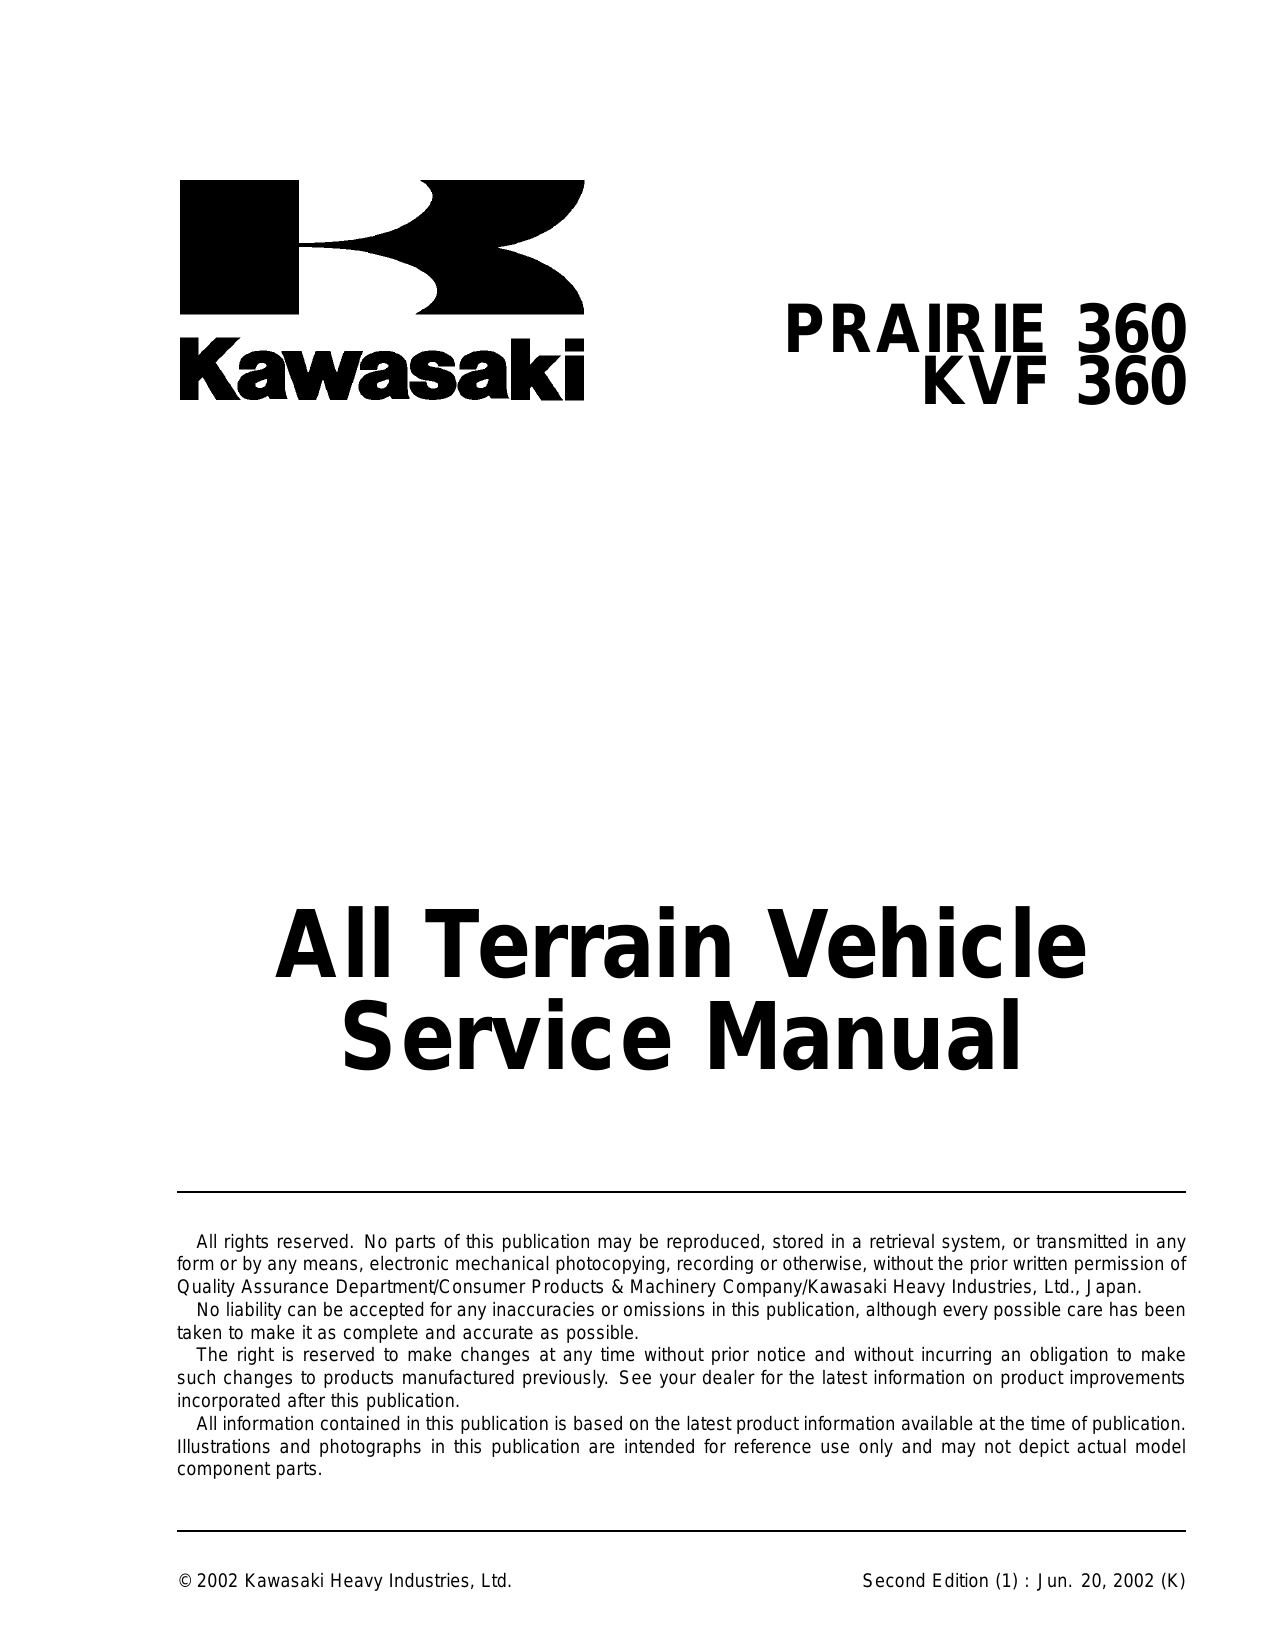 2003-2009 Kawasaki Prairie 360, KVF360 service, shop manual Preview image 1